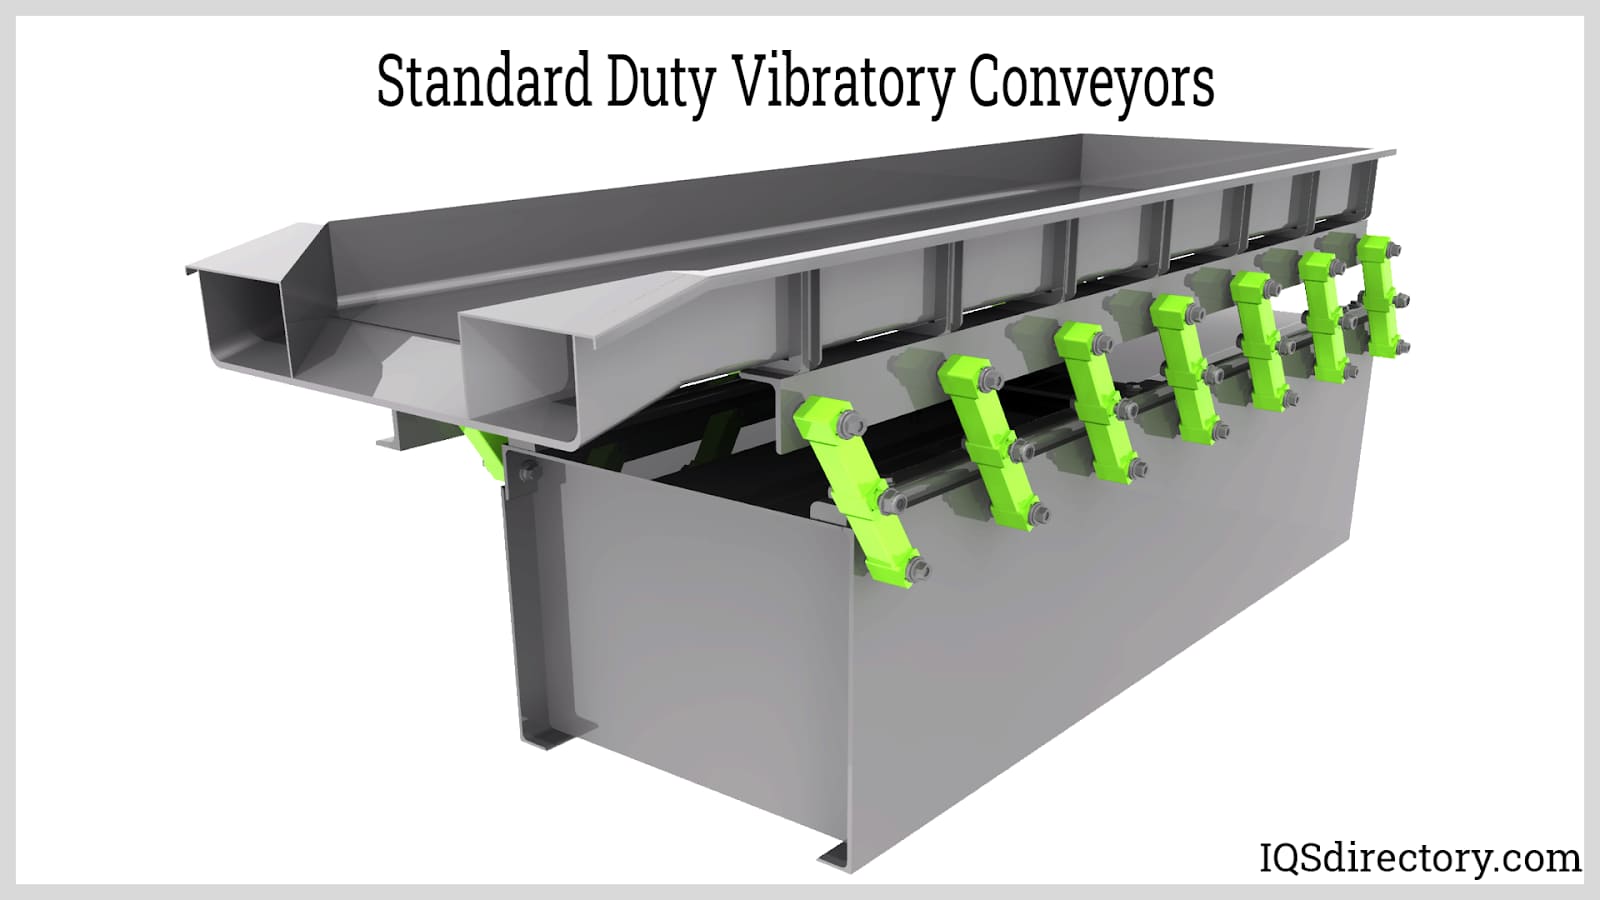 Standard Duty Vibratory Conveyors